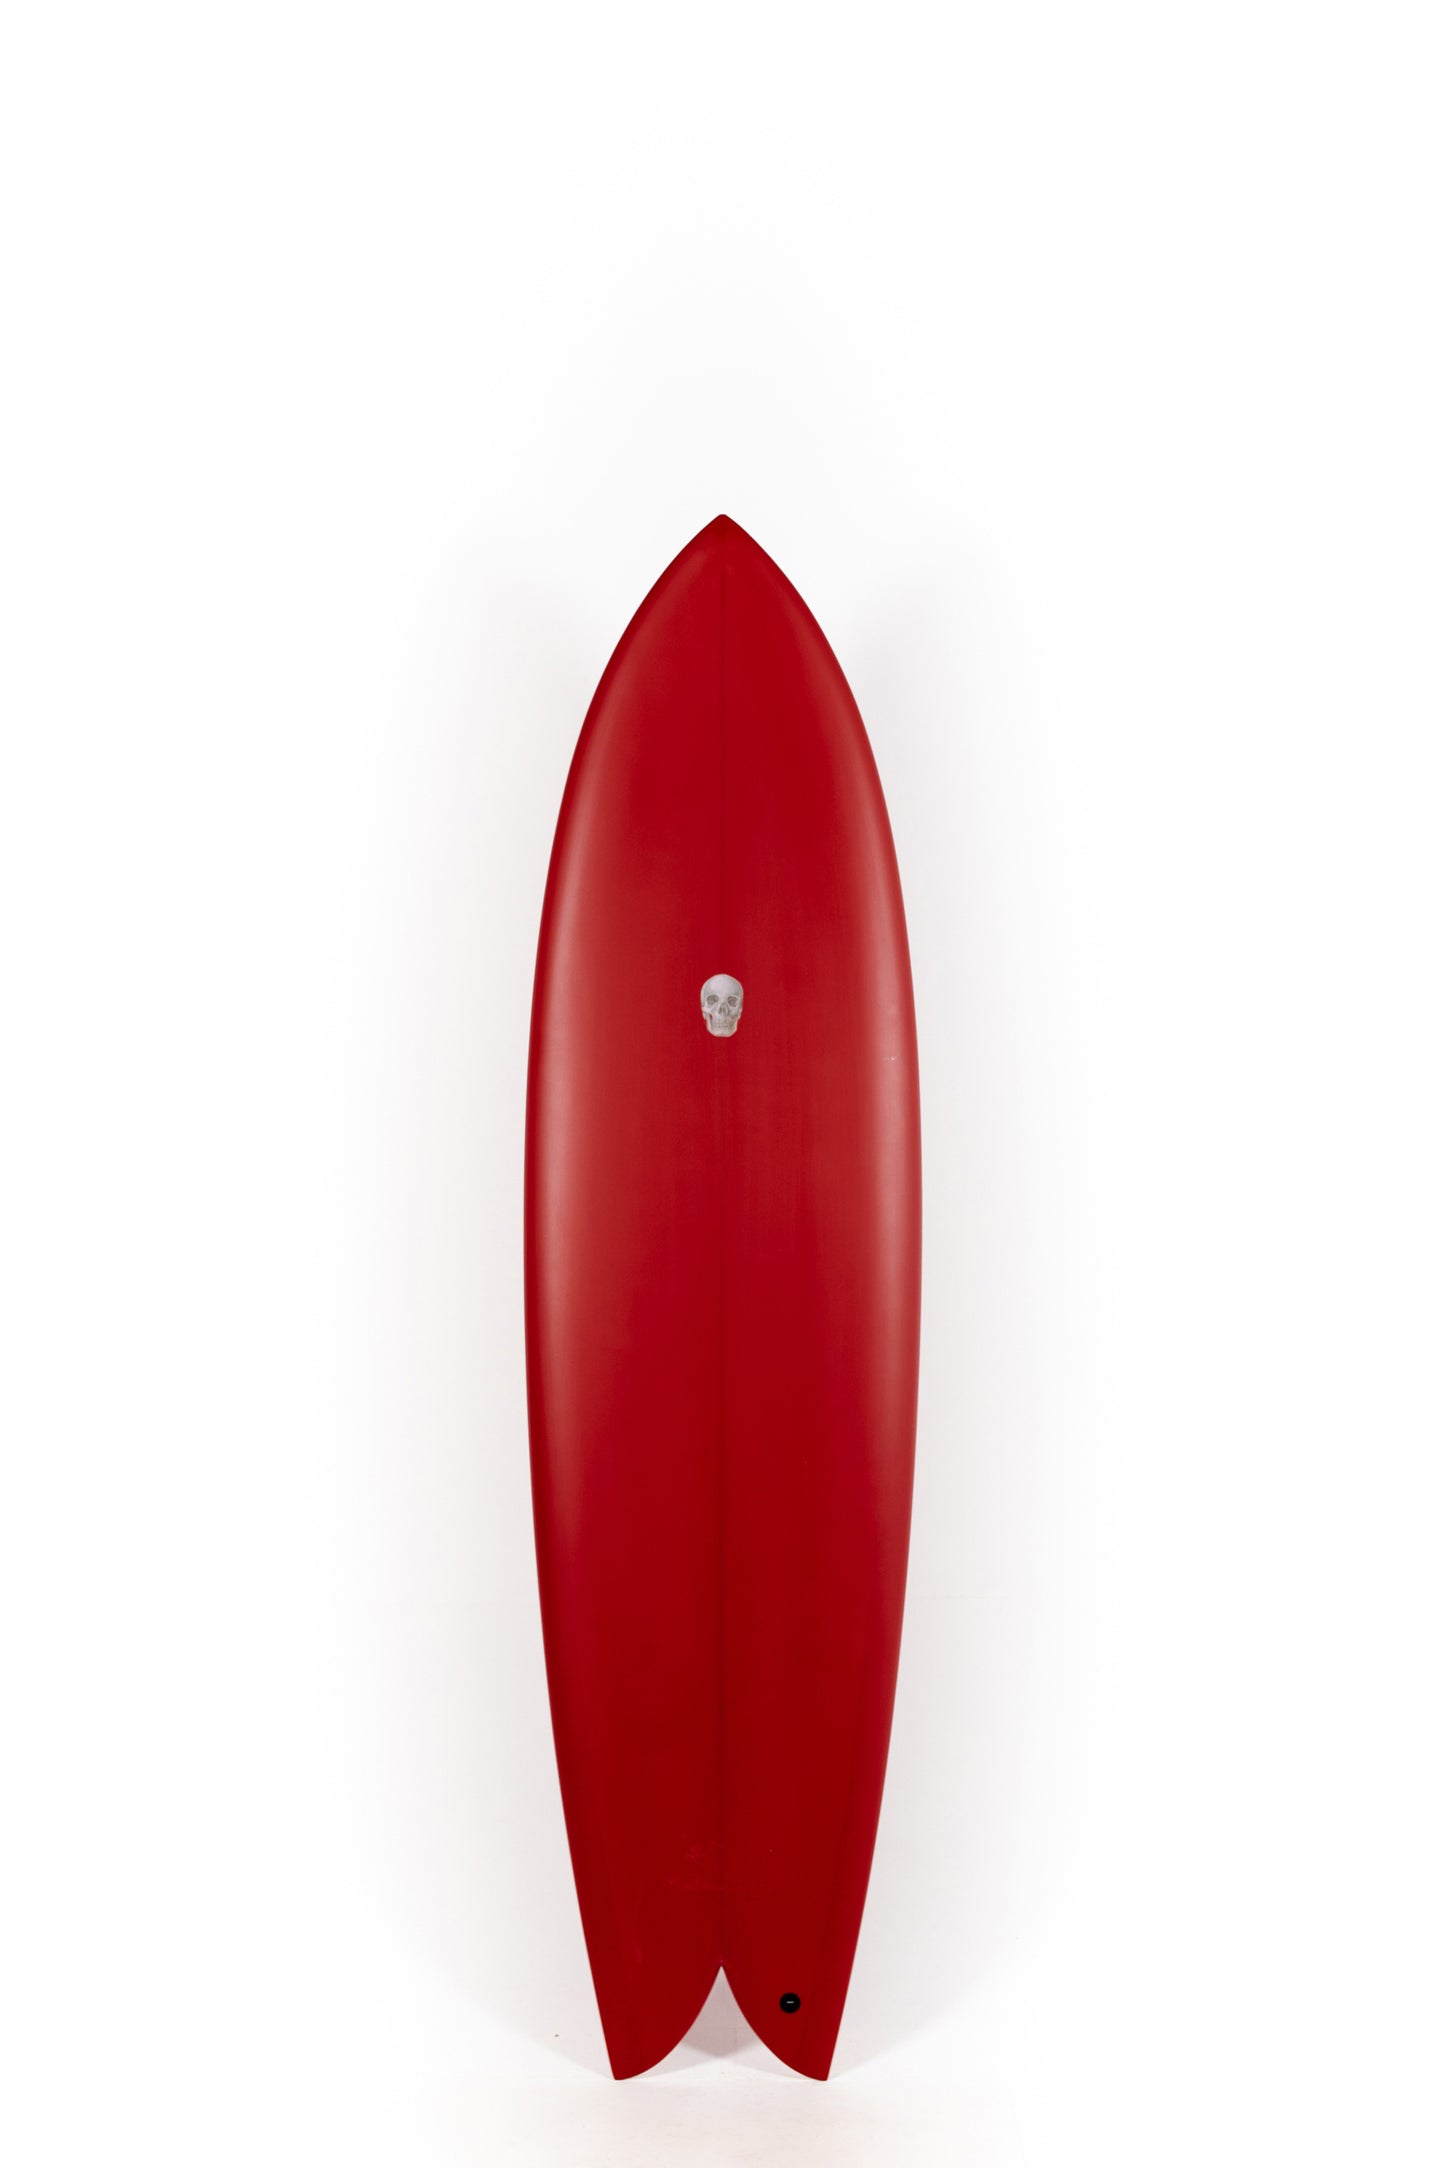 Pukas Surf shop - Christenson Surfboards - LONG PHISH - 7'0" x 21 x 2 5/8 - CX03326